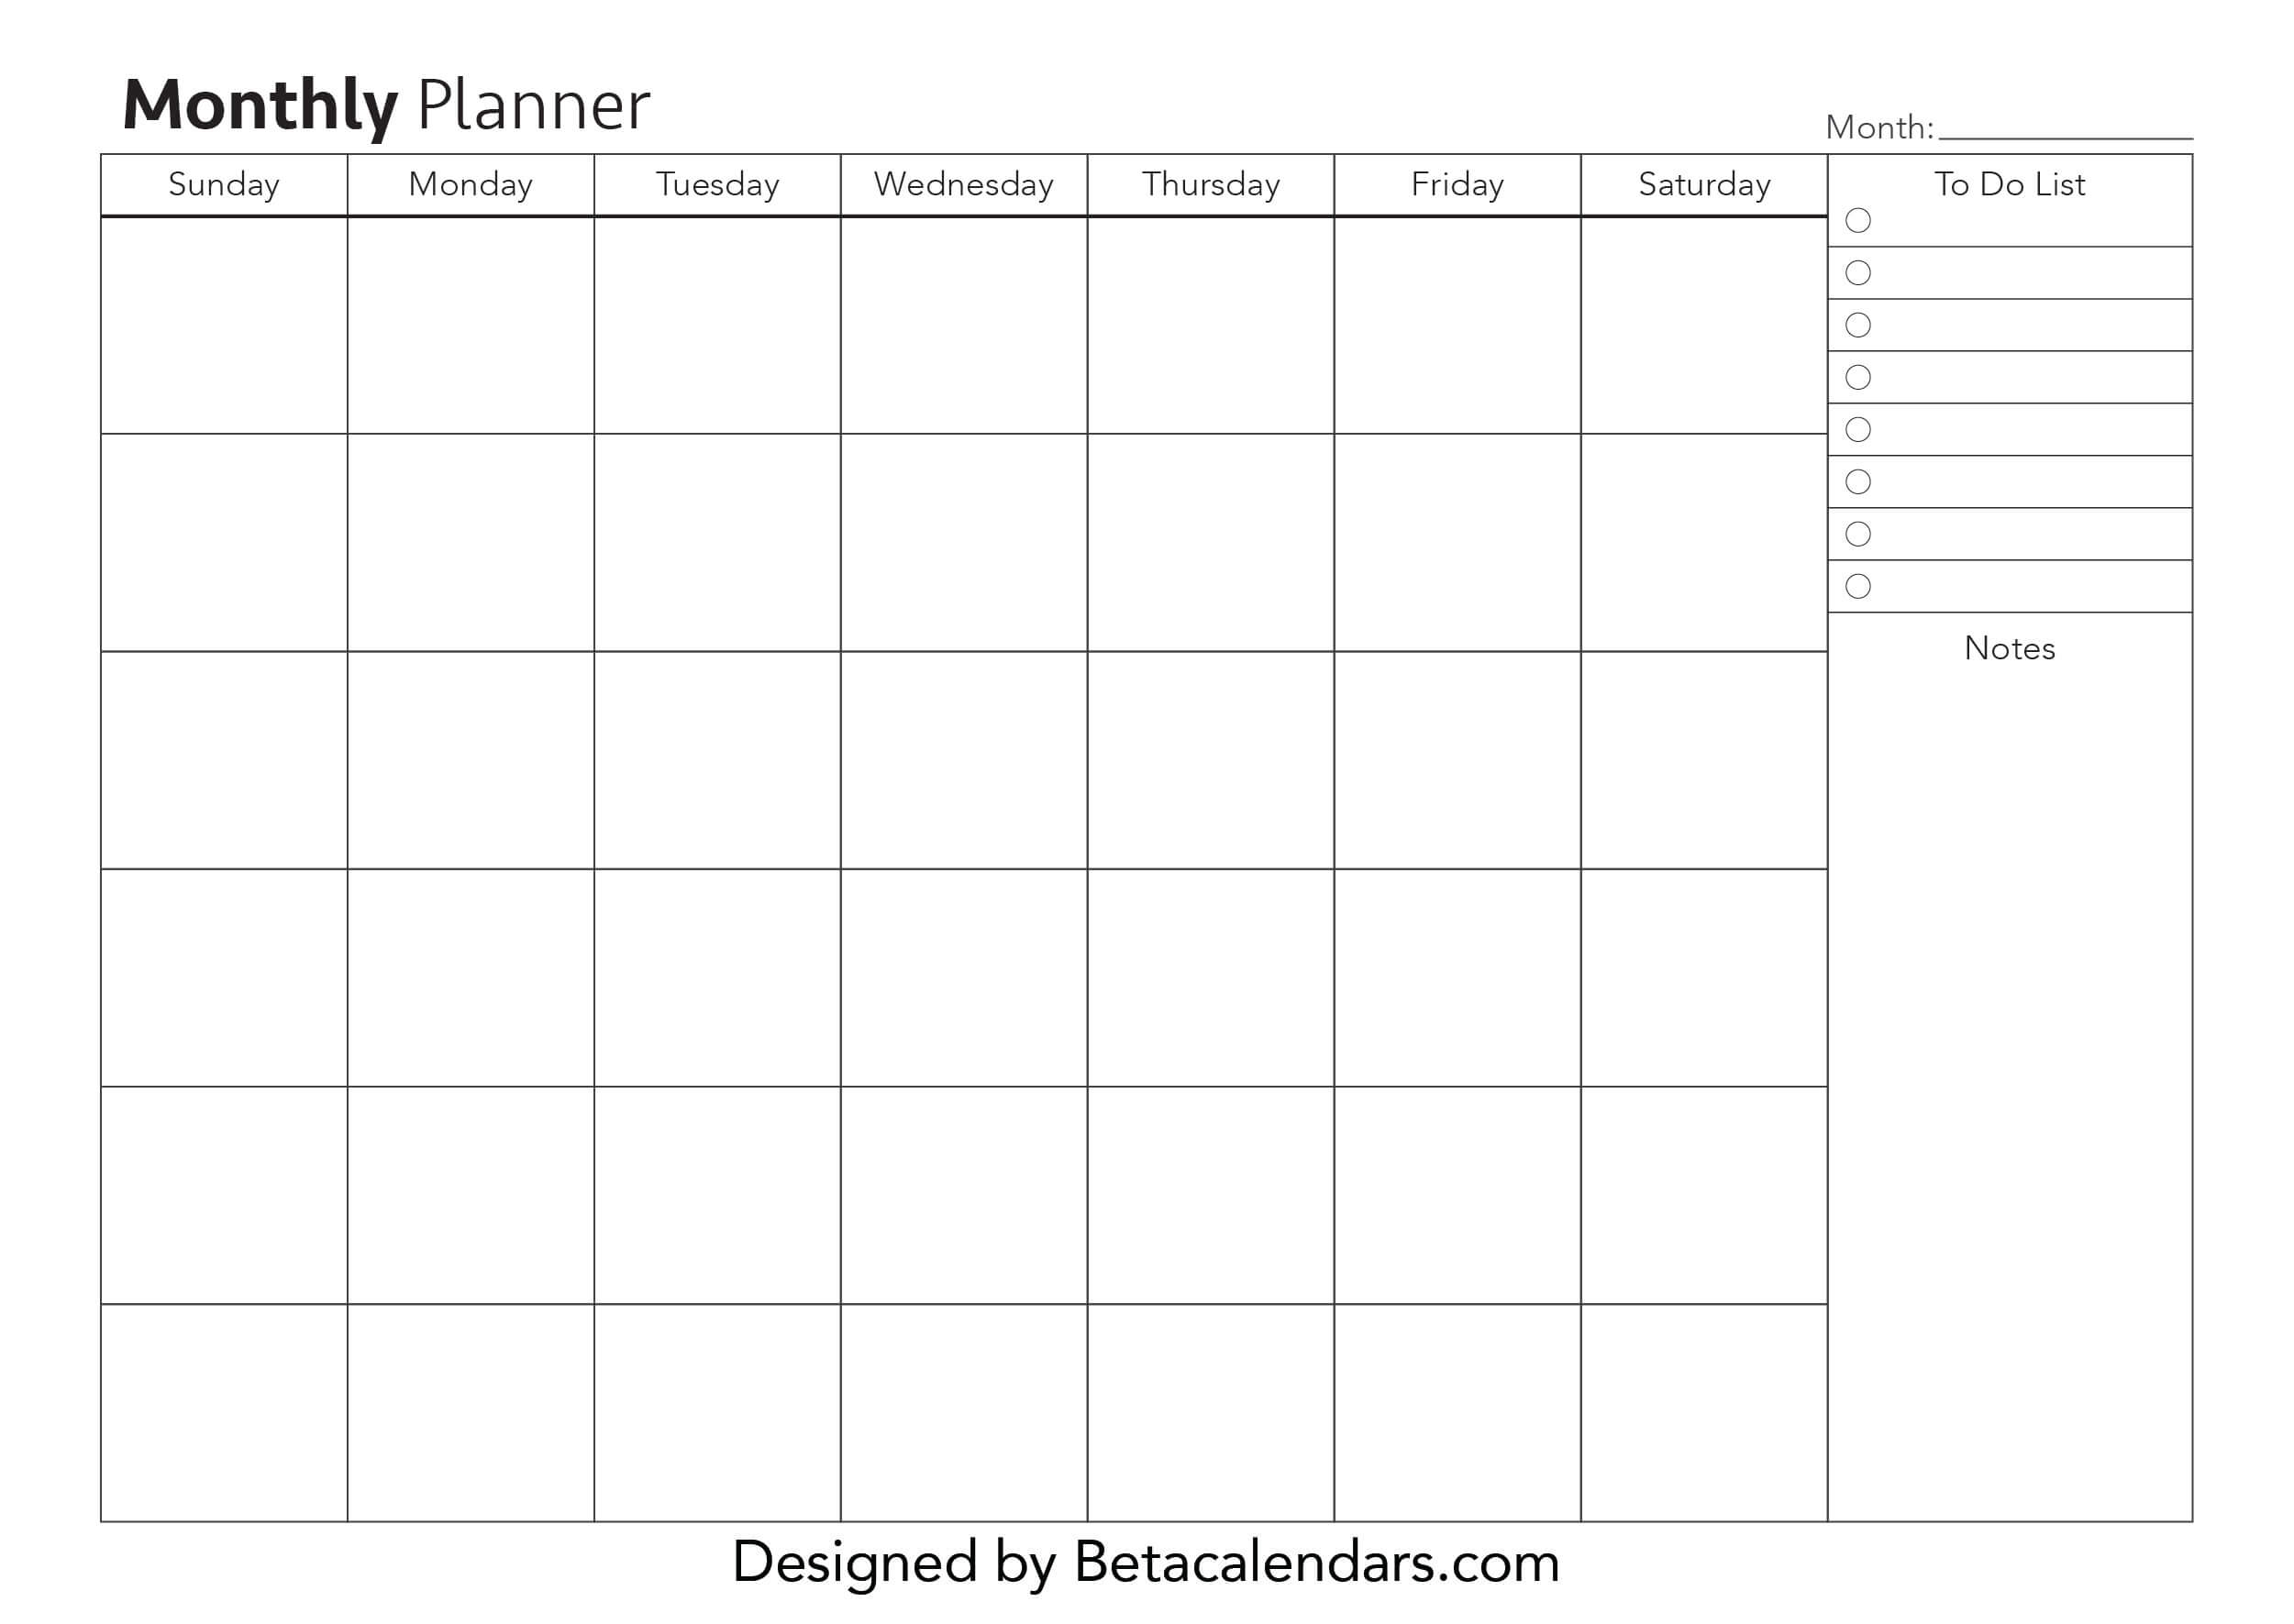 Free Printable Monthly Planner - Beta Calendars